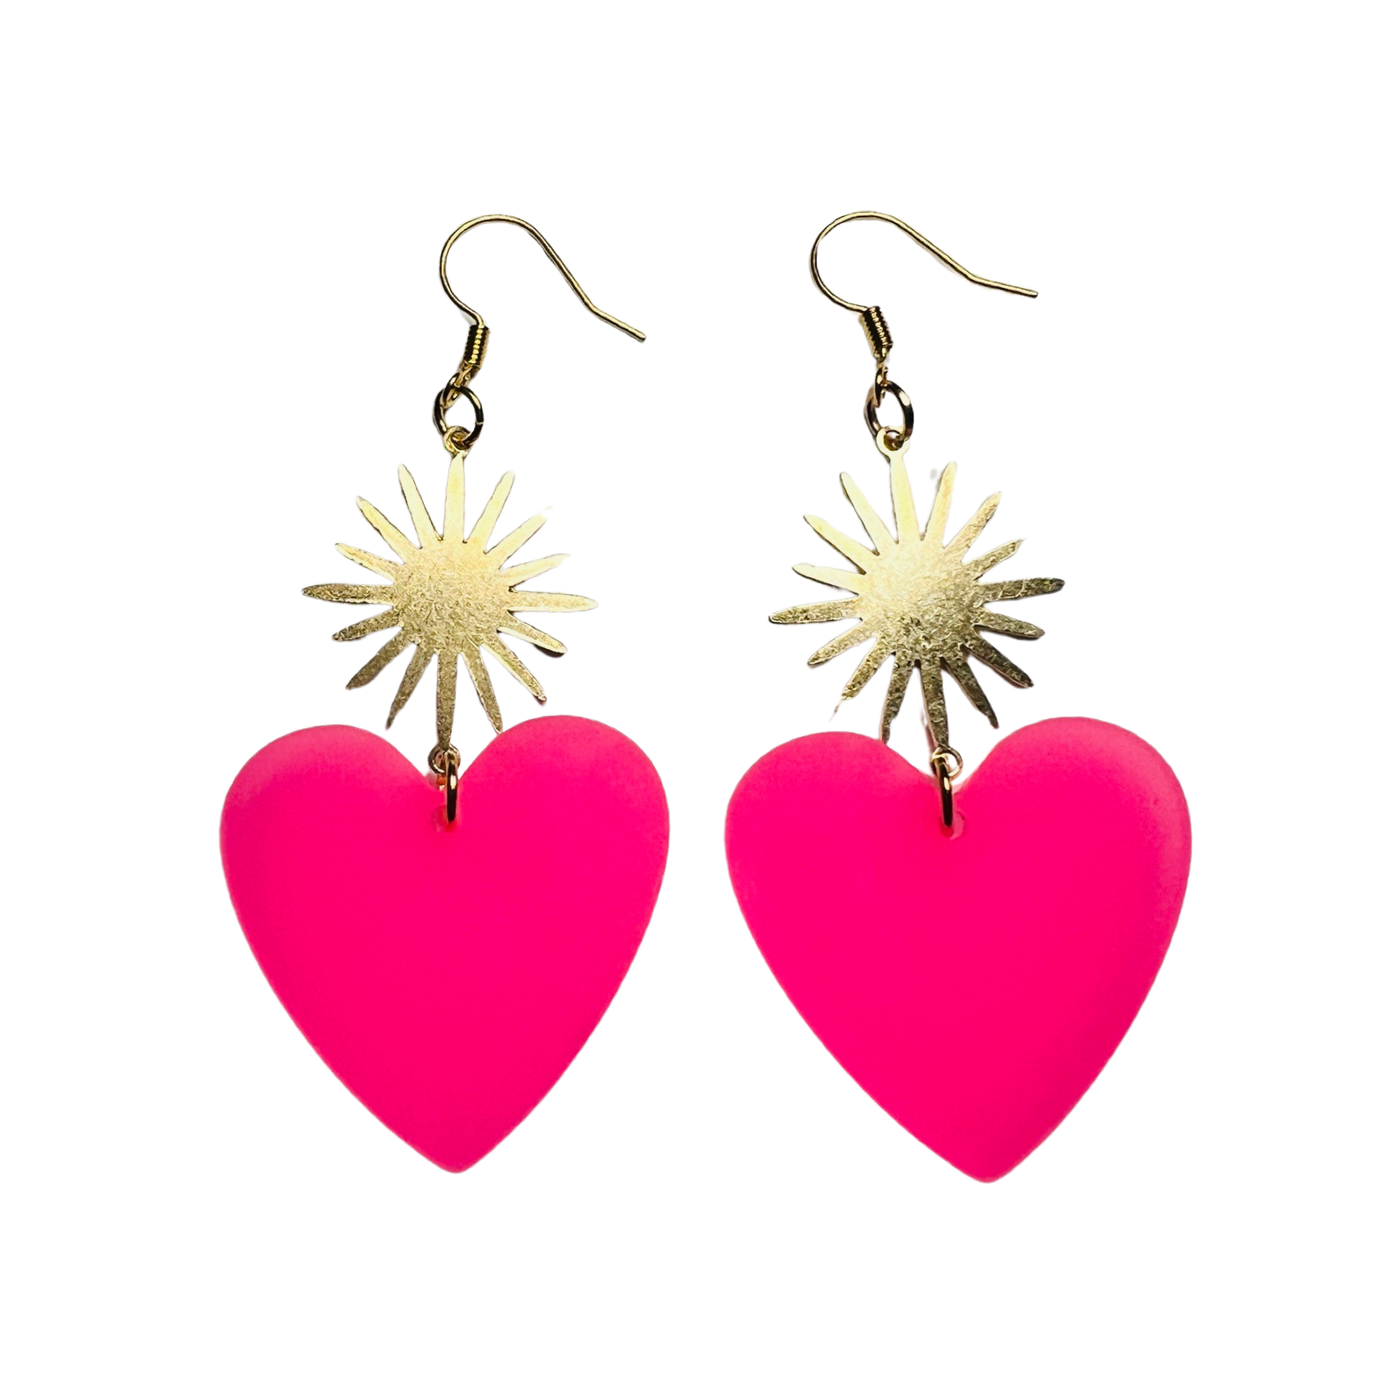 set of hot pink resin heart earrings with a brass sunburst